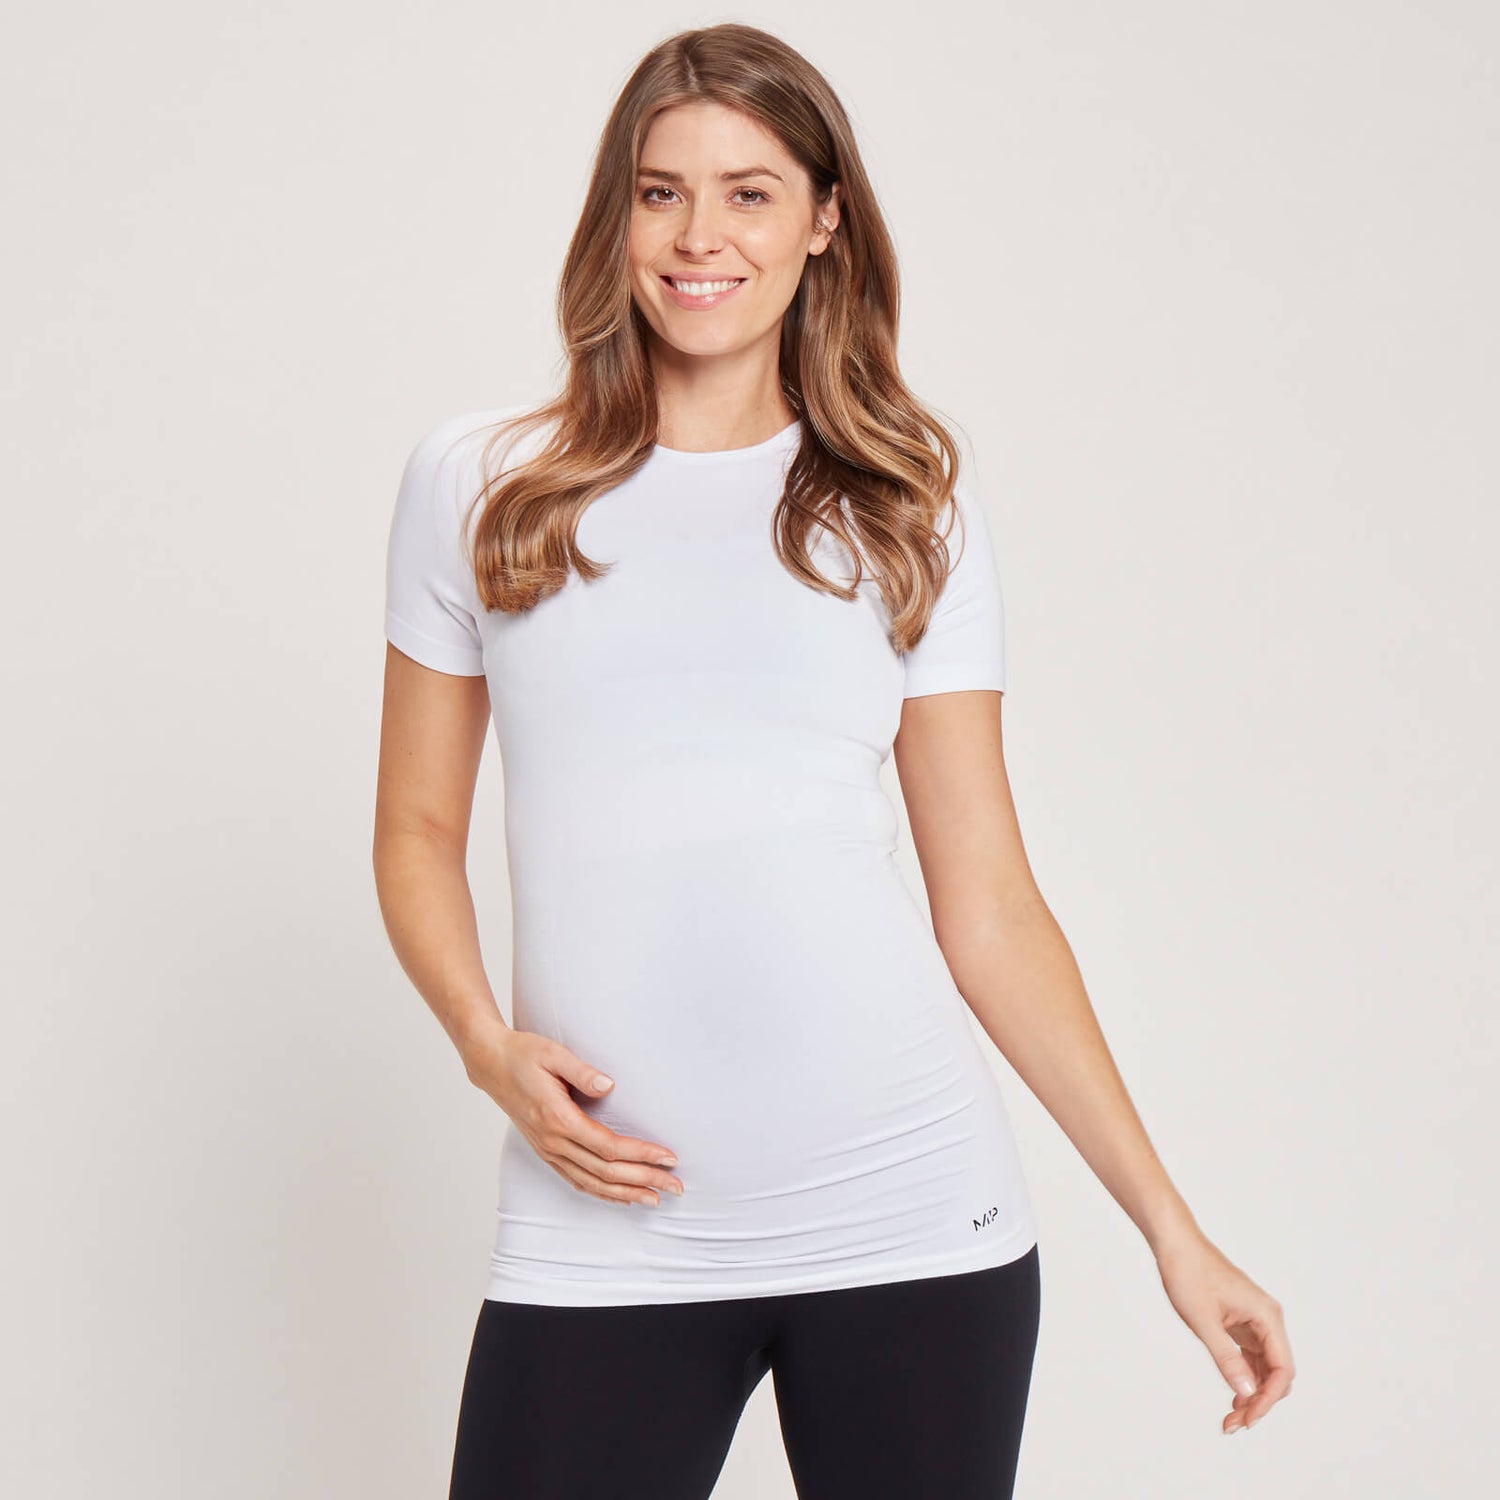 Бесшовная футболка для беременных MP с короткими рукавами, белая - XXS